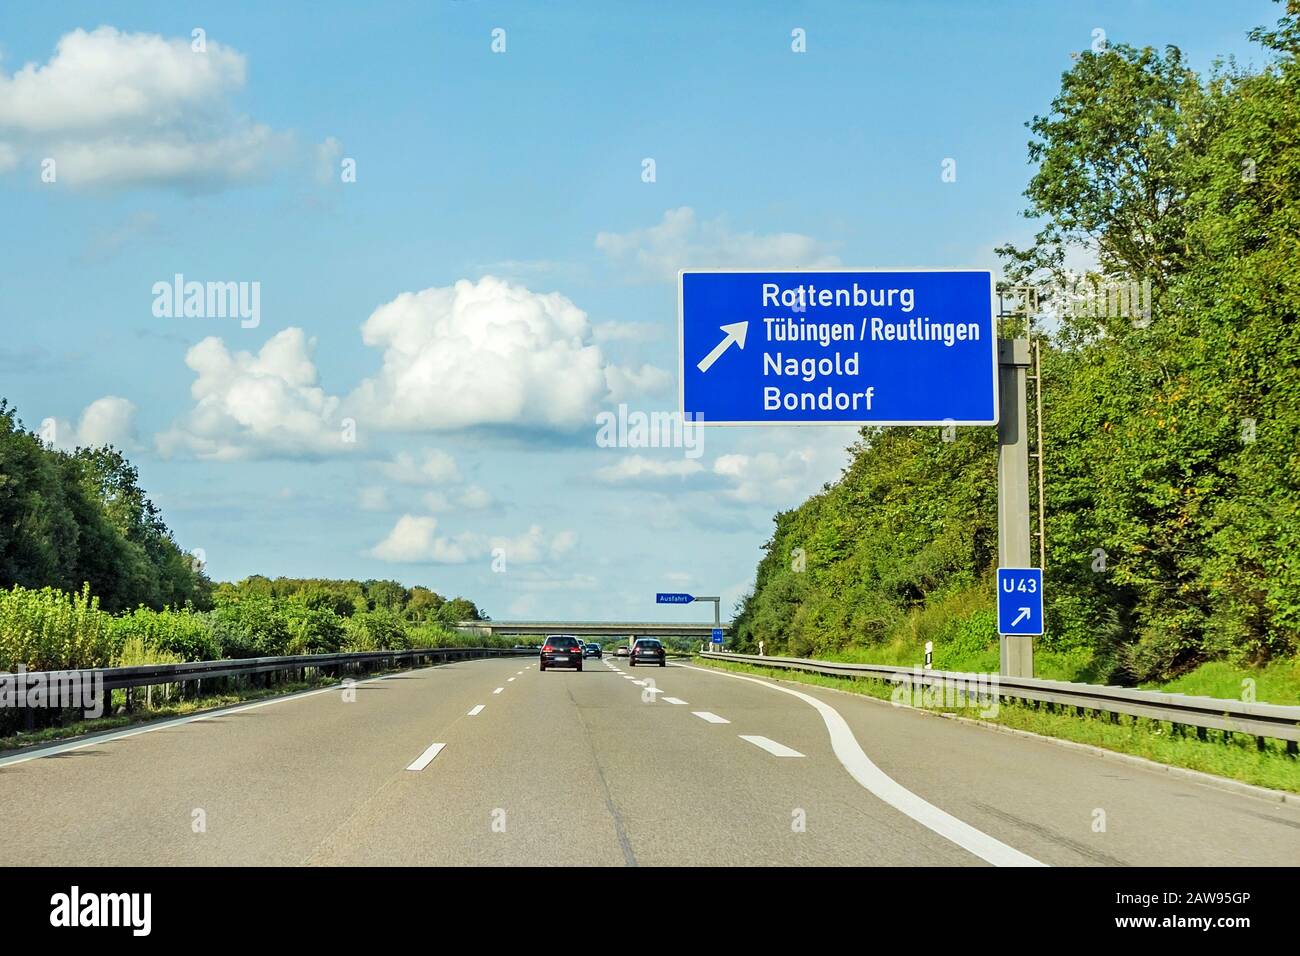 motorway road sign on (Autobahn 81 / A 81 / E 531) direction to city Herrenberg / Stuttgart - exit Rottenburg / Tubingen / Reutlingen / Nagold / Bondo Stock Photo